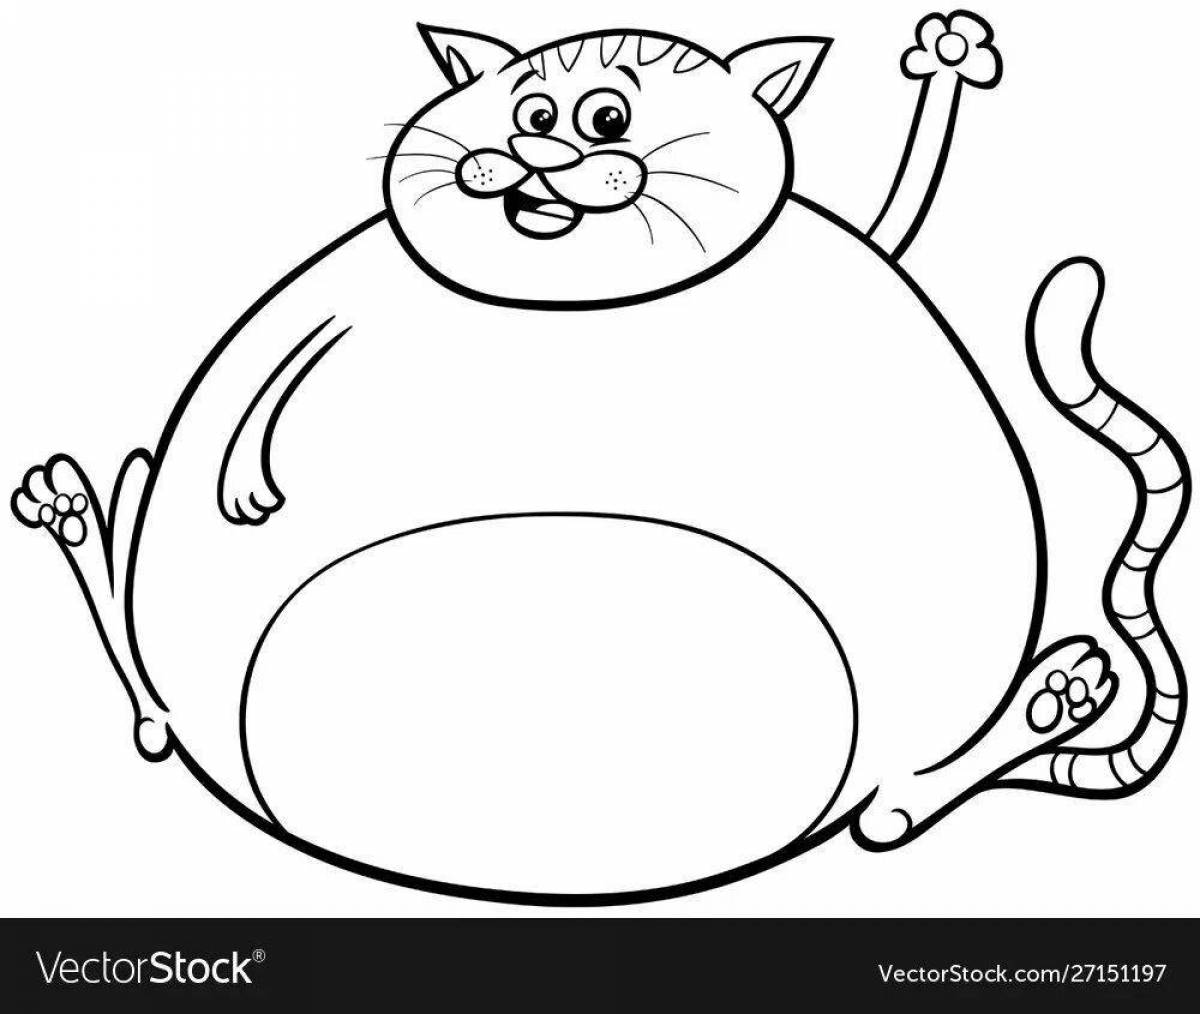 Colouring dozing chubby cat